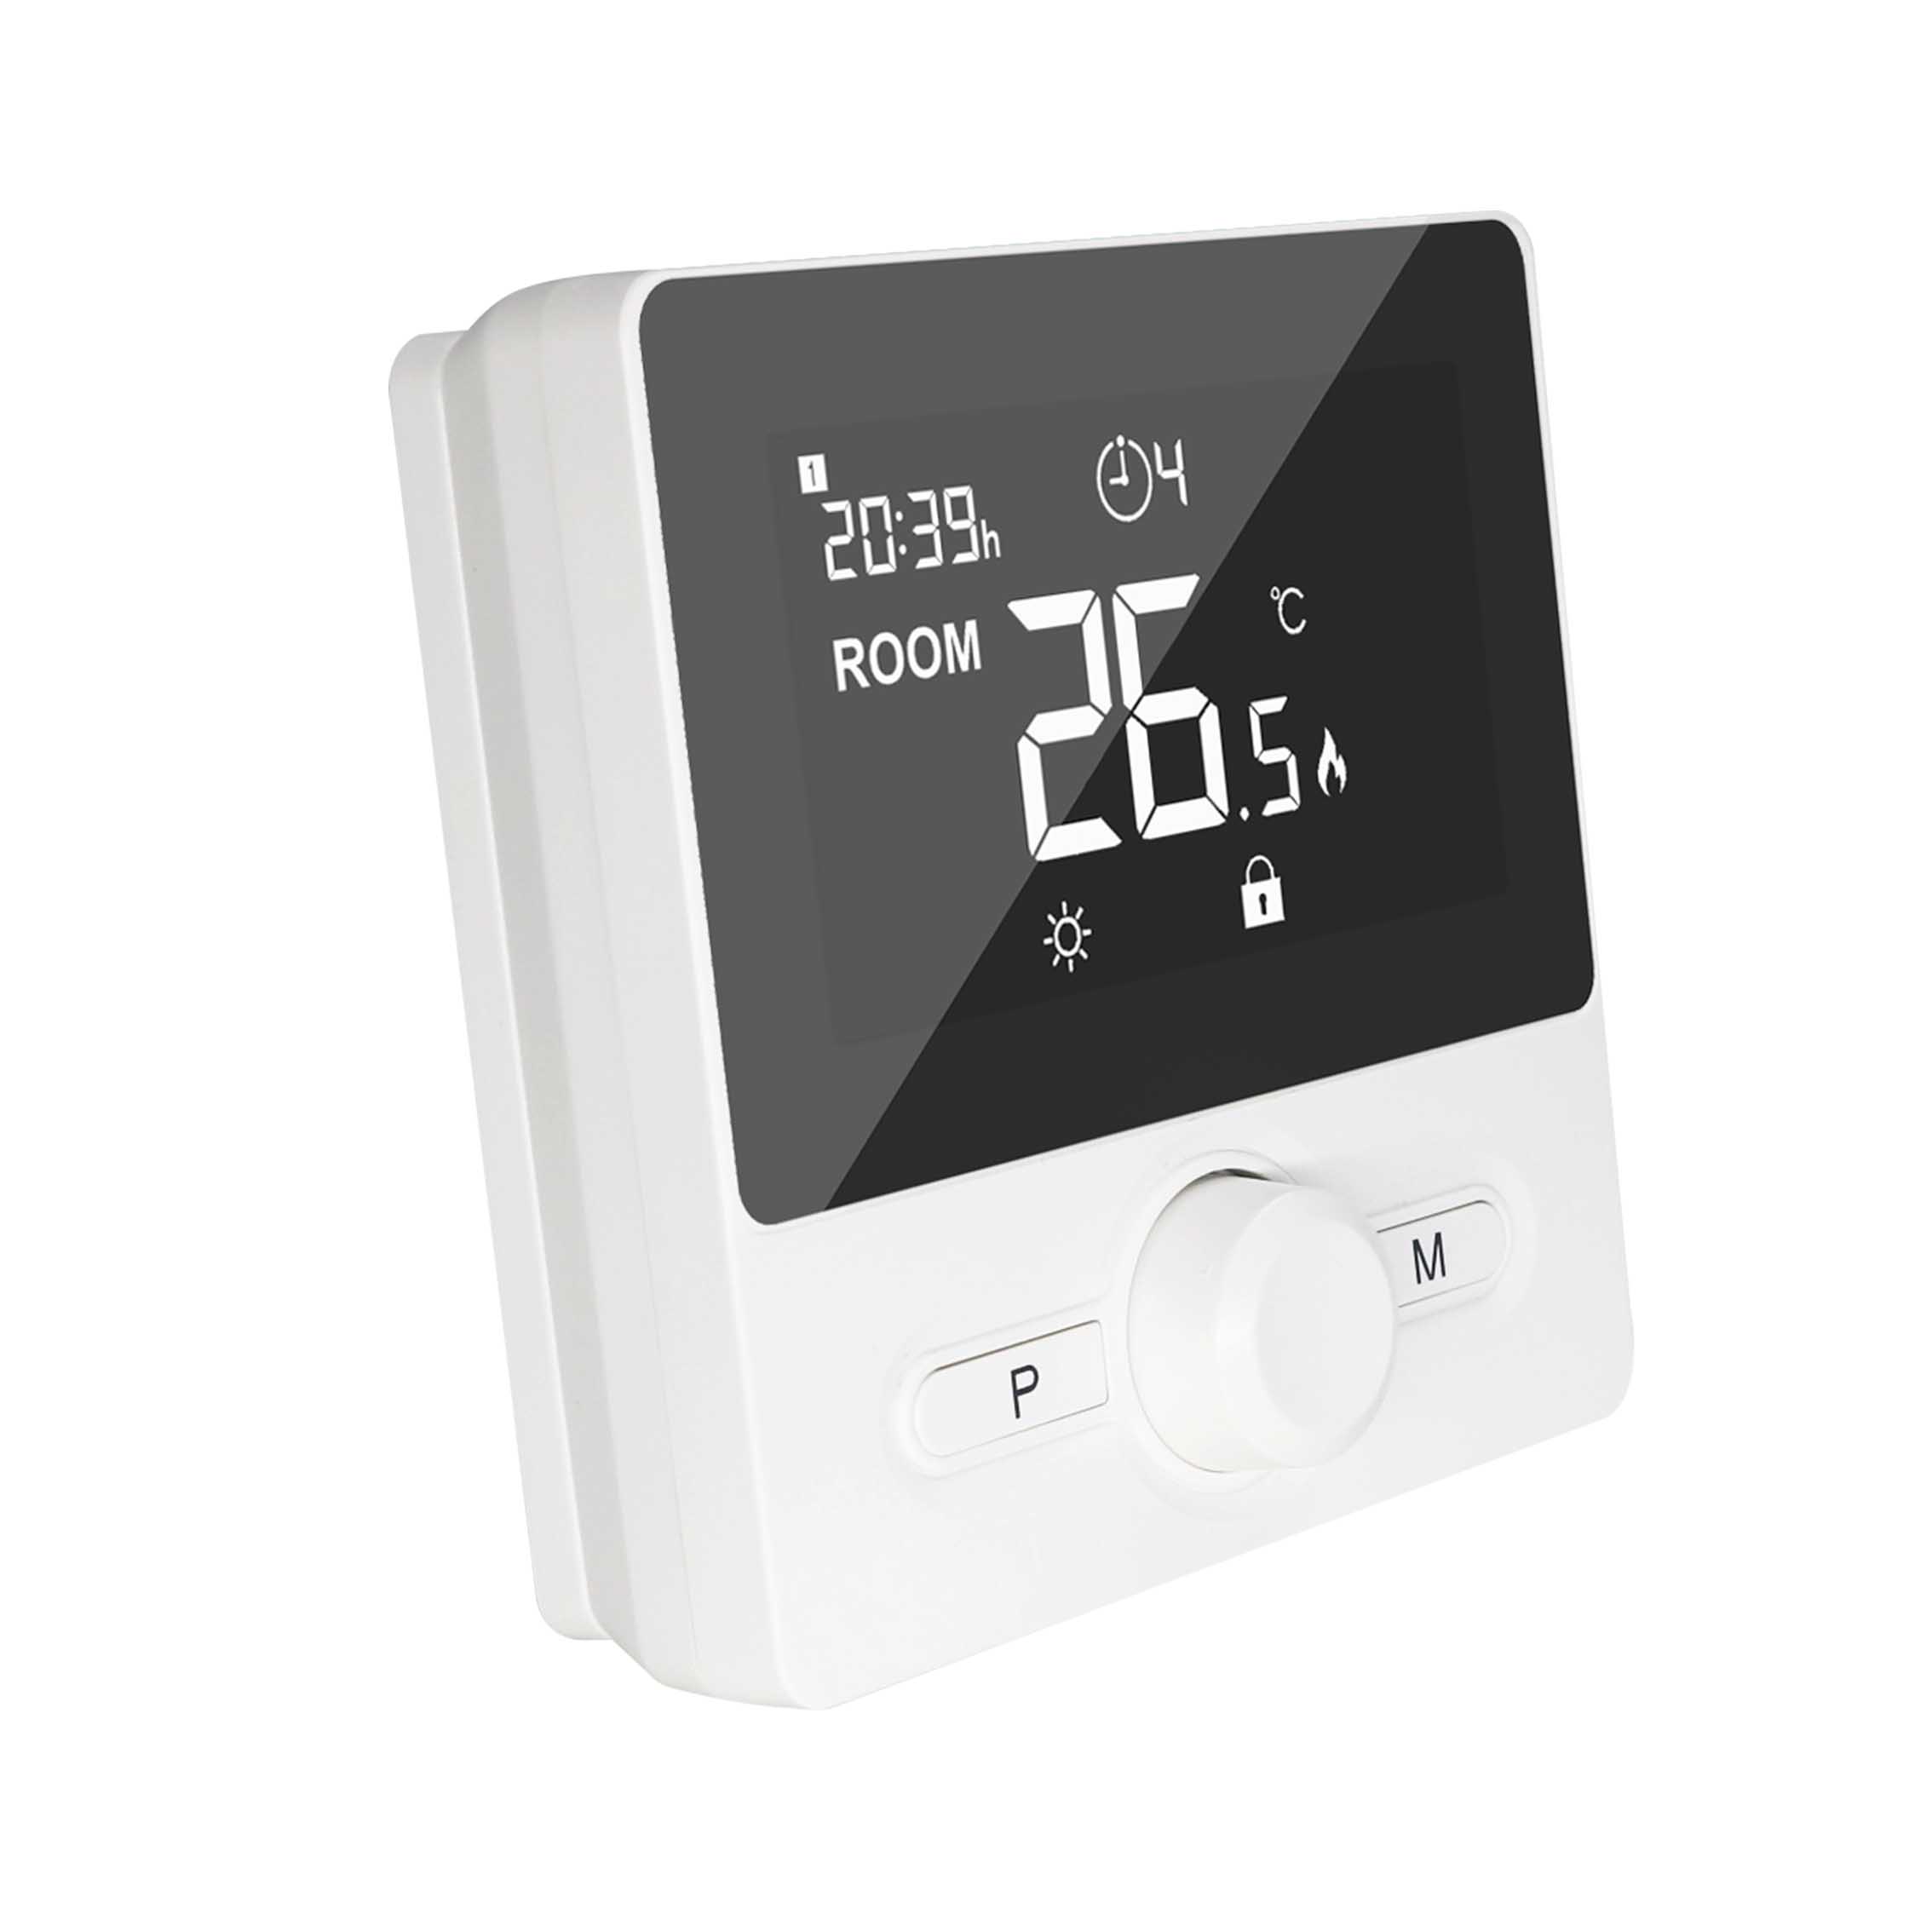 Water heat pump thermostat